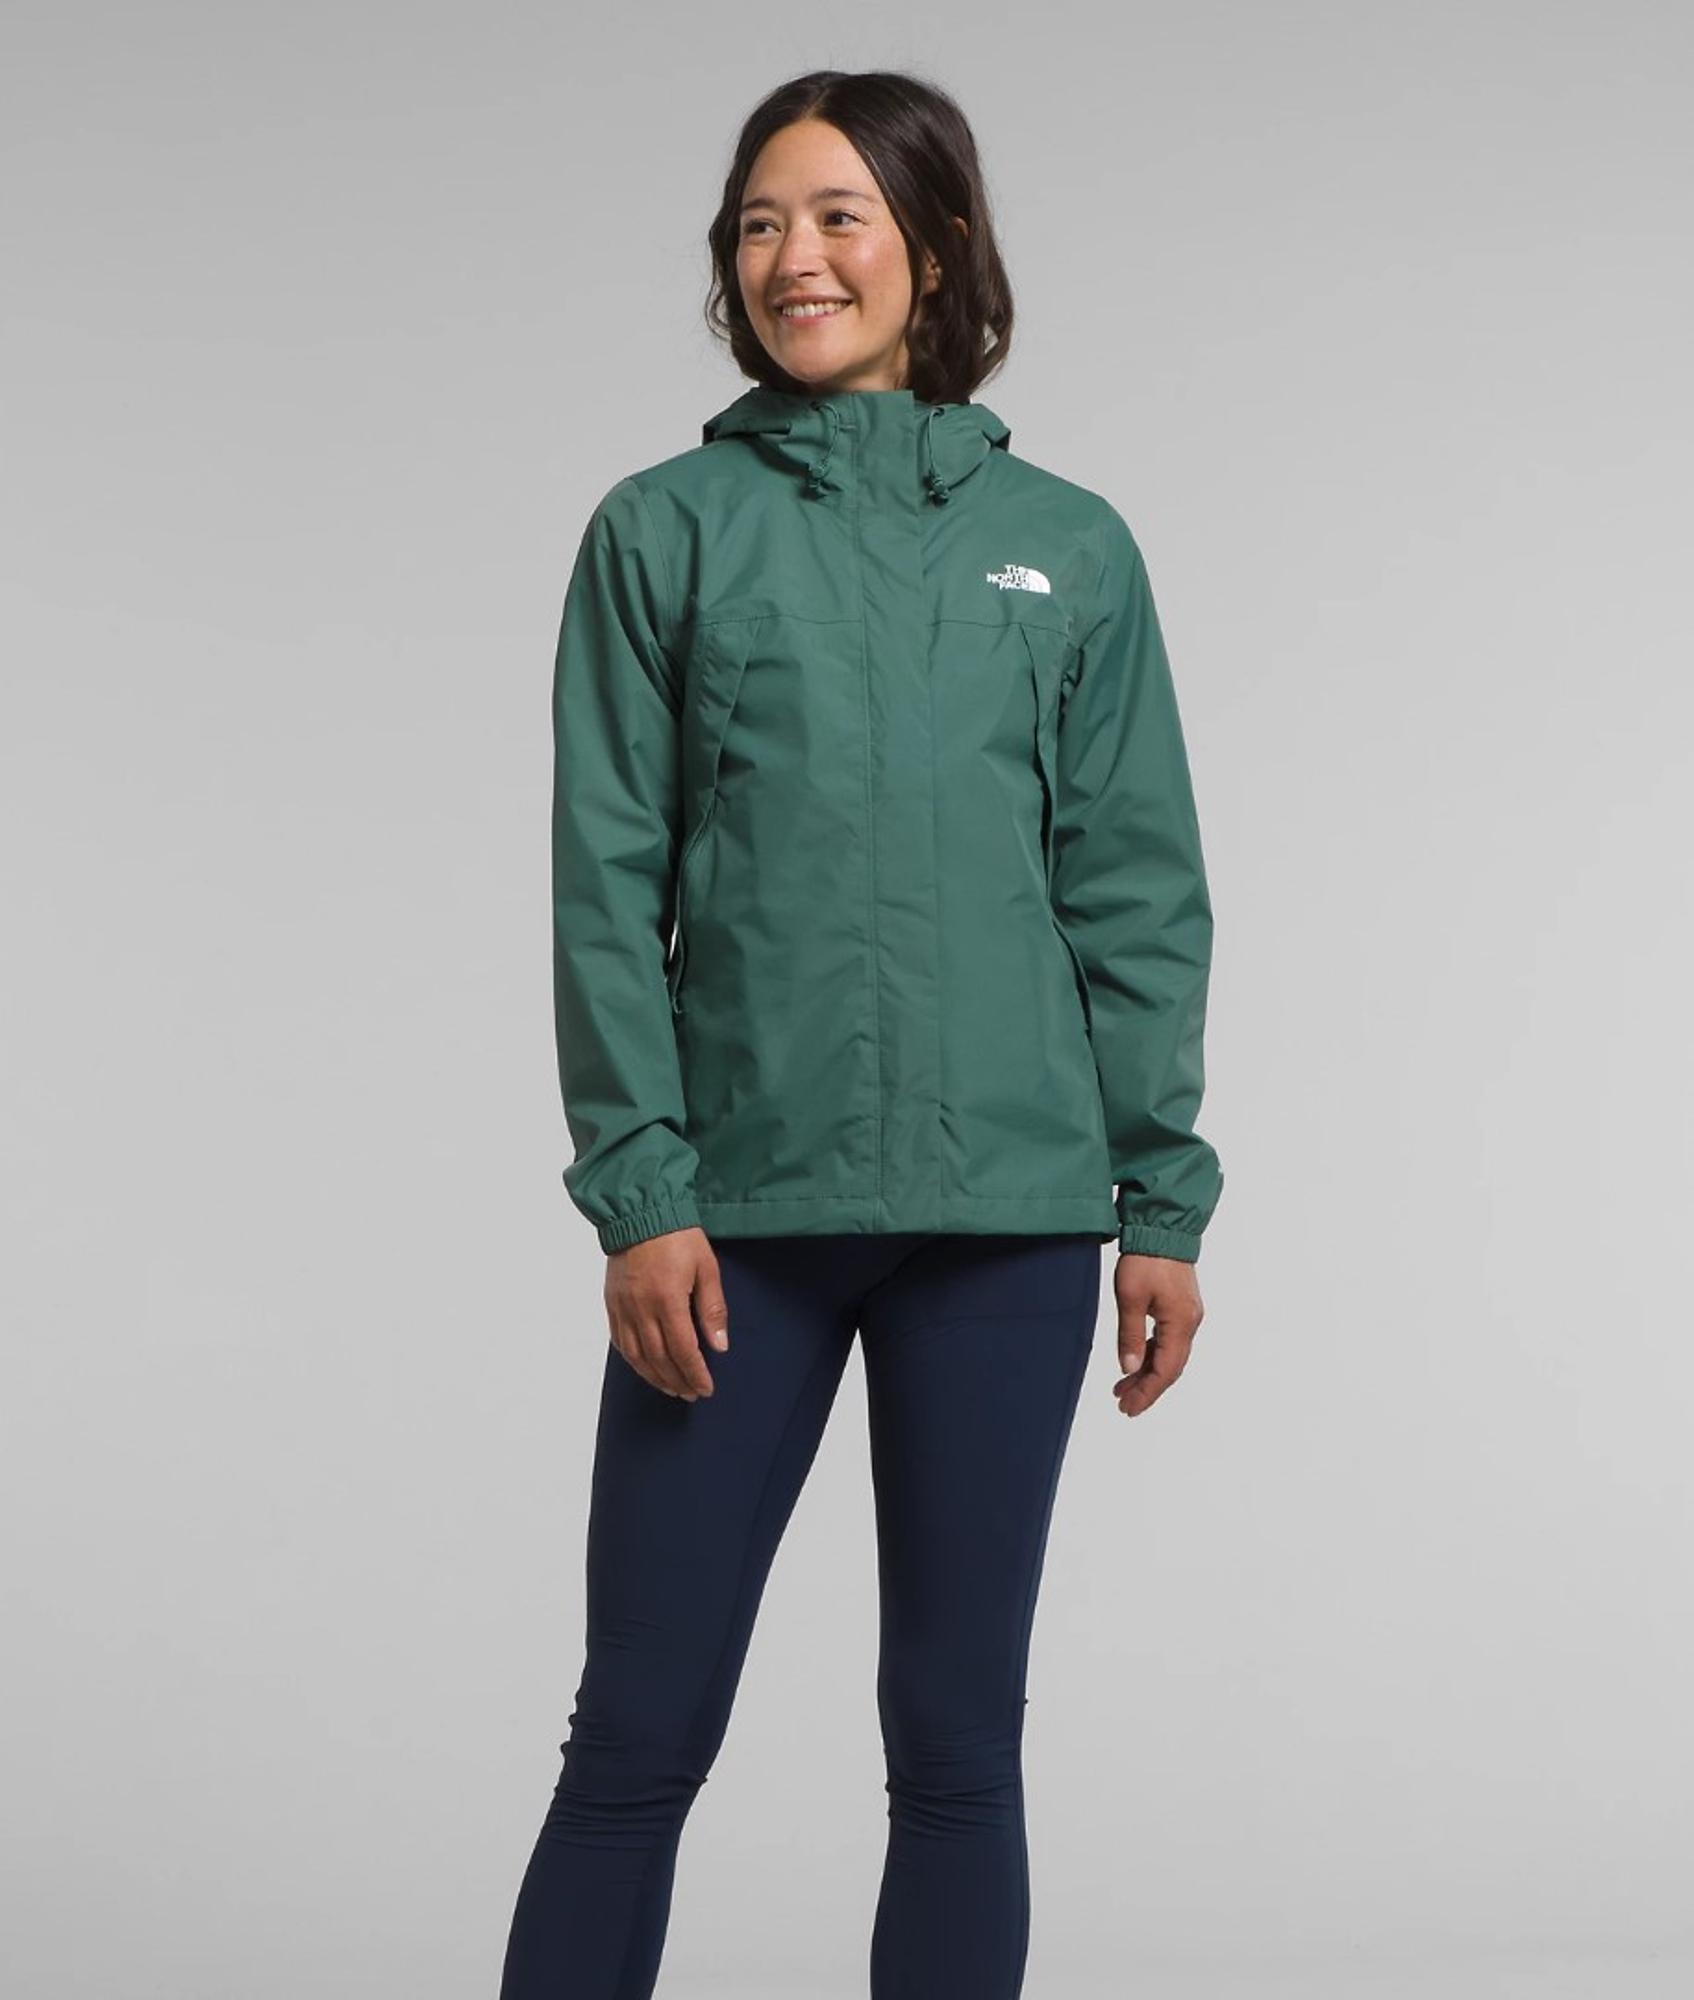 Women's Antora Rain Jacket